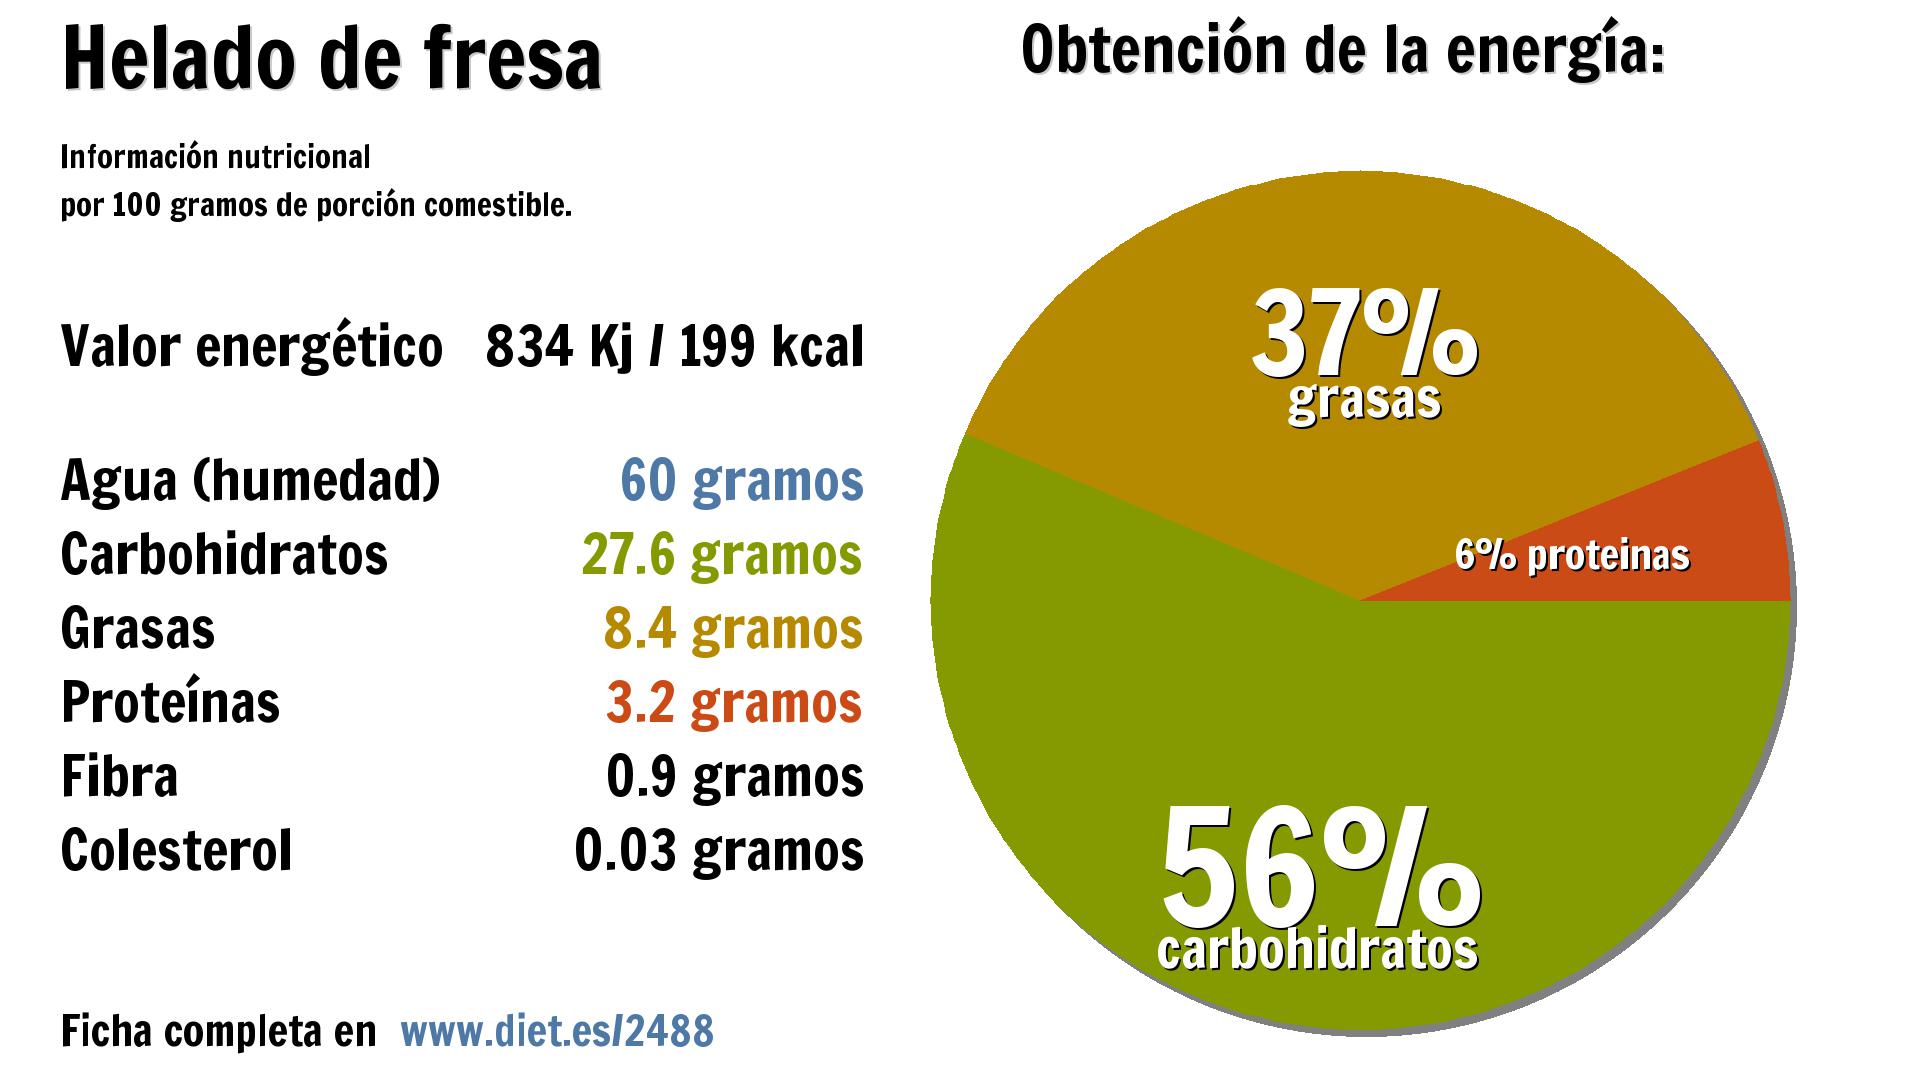 Helado de fresa: energía 834 Kj, agua 60 g., carbohidratos 28 g., grasas 8 g., proteínas 3 g. y fibra 1 g.